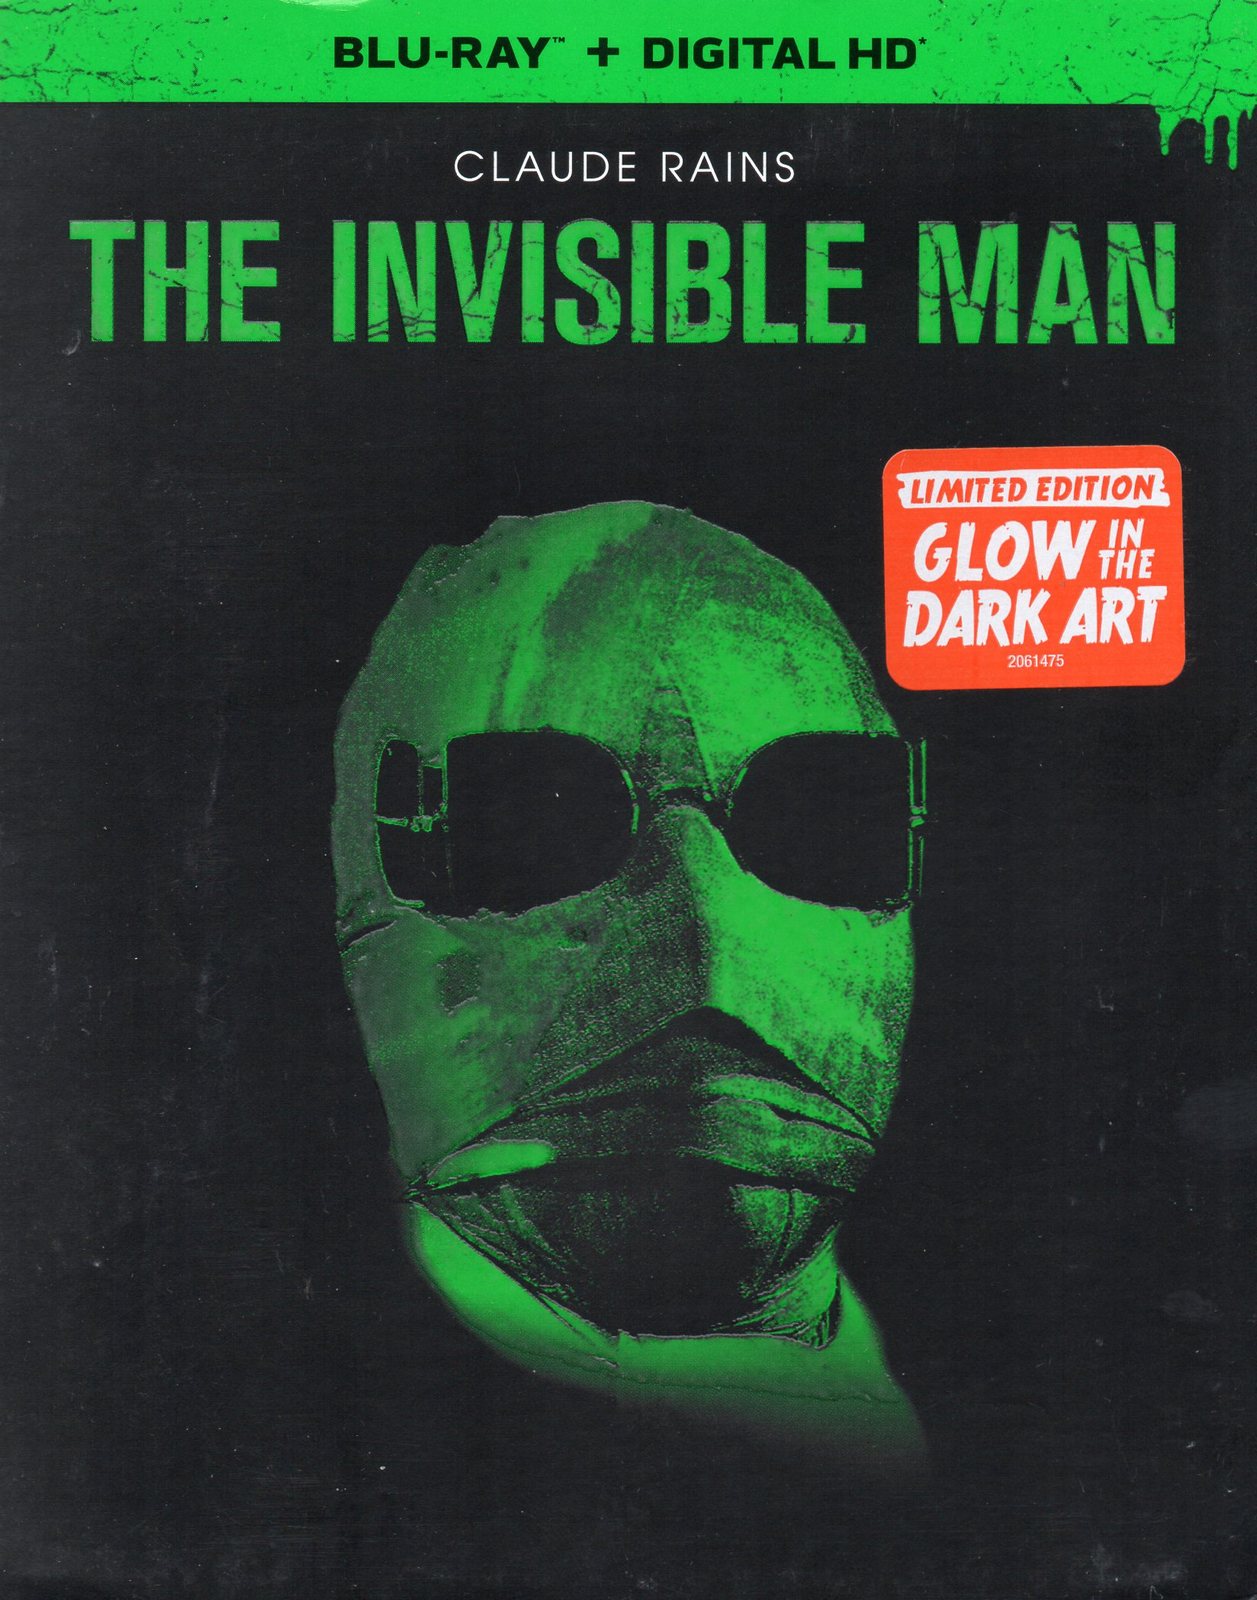 INVISIBLE MAN (blu-ray) *NEW* B&W, full frame, glow in the dark artwork sleeve - $15.99